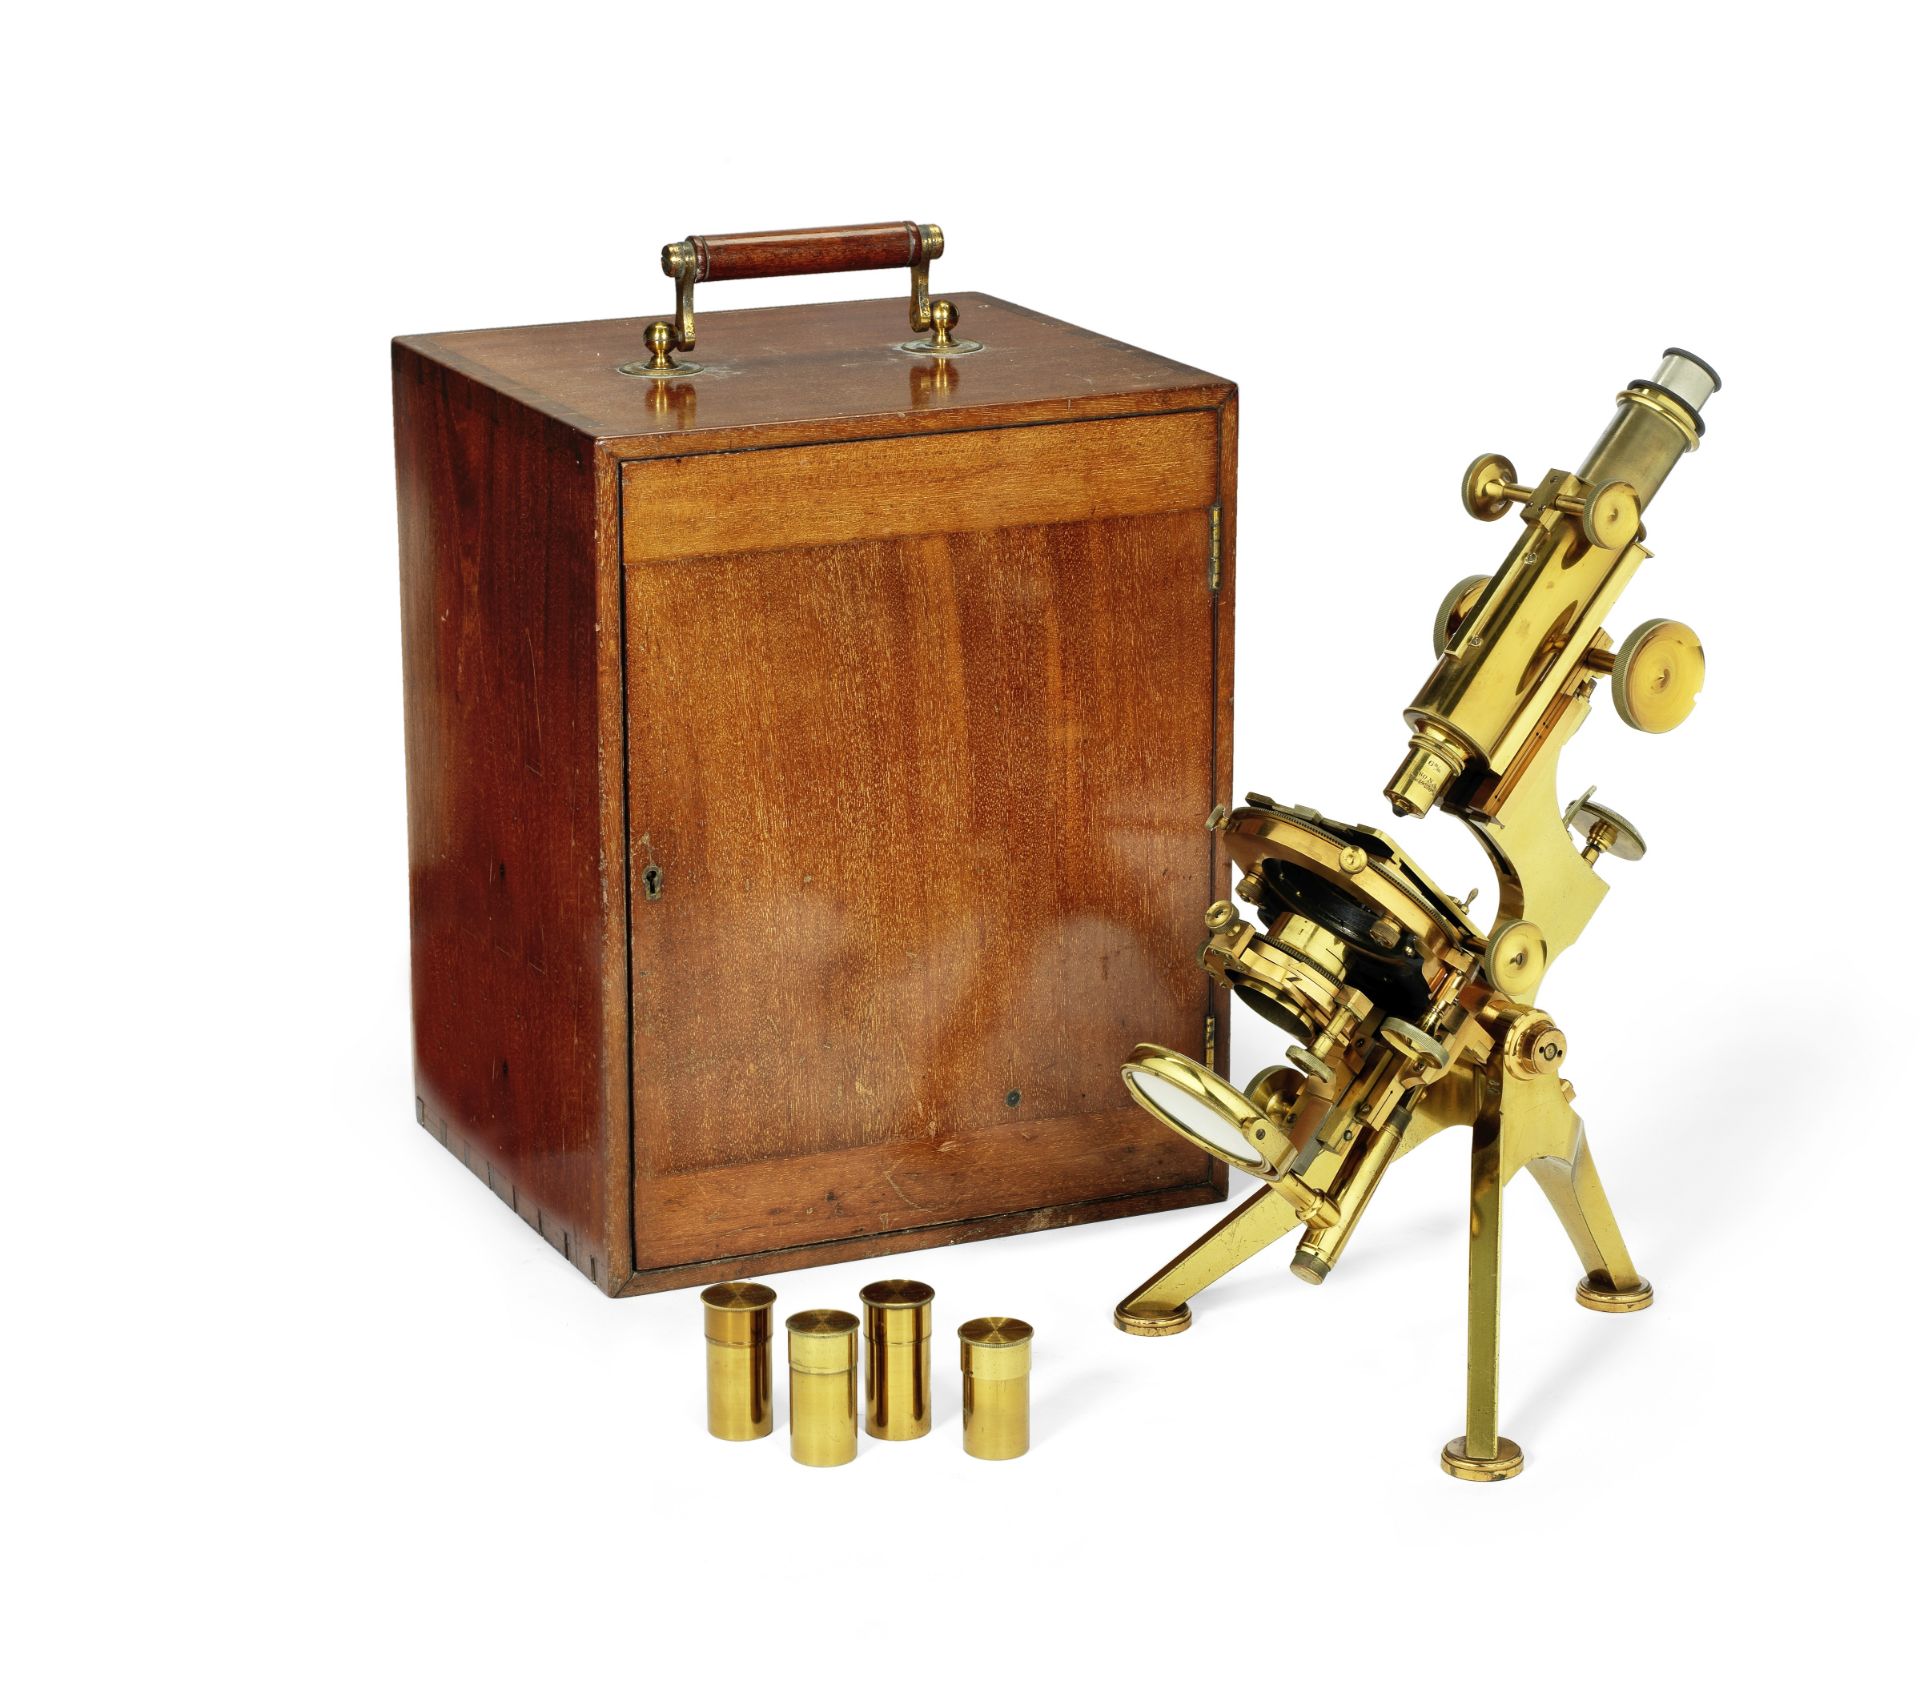 A fine W. Watson & Sons Van Heurck monocular/binocular compound microscope, English, circa 1900,